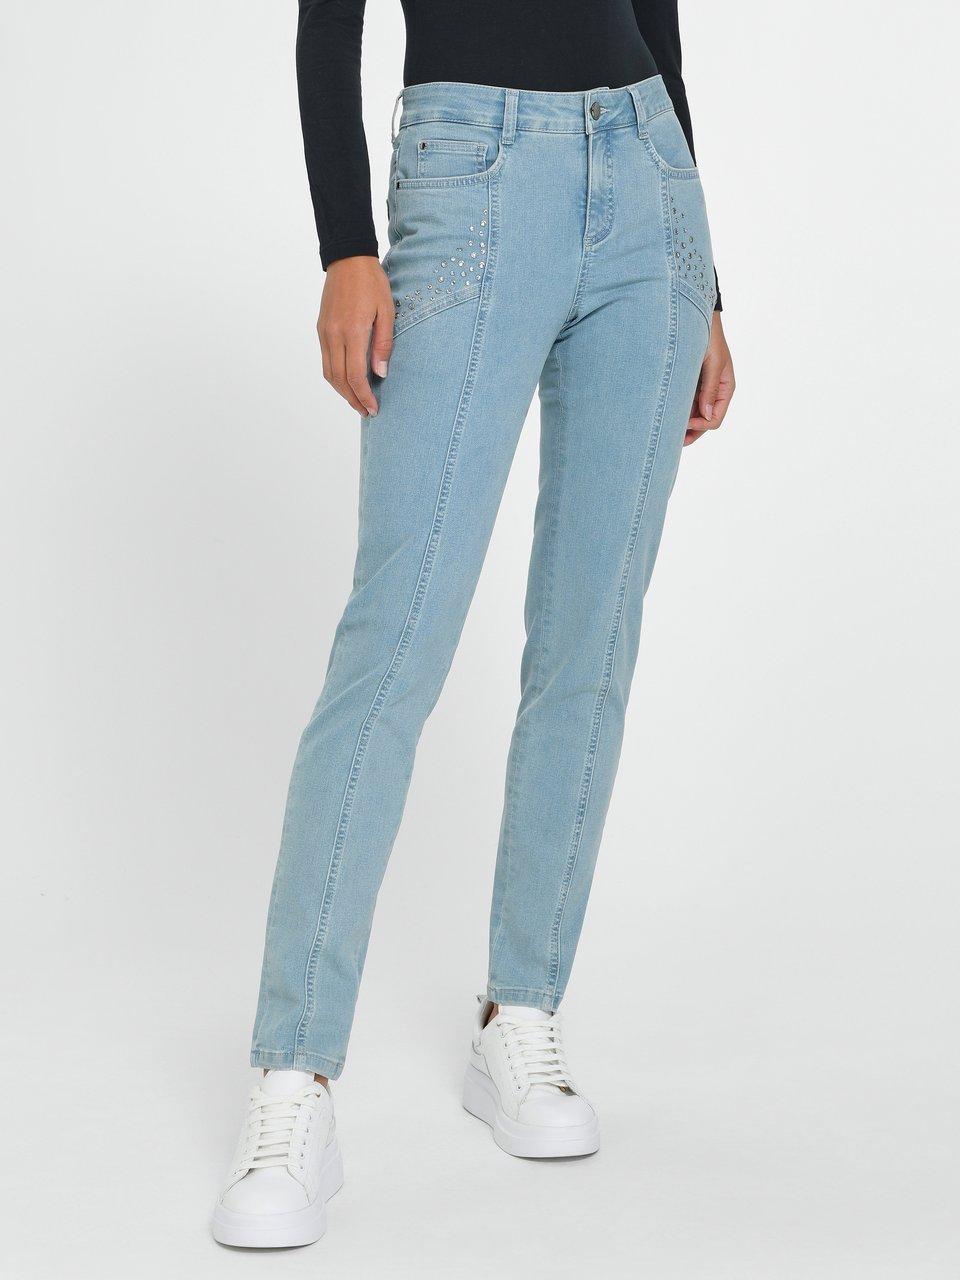 TALBOT RUNHOF X PETER HAHN - Jeans in 5-pocketsmodel